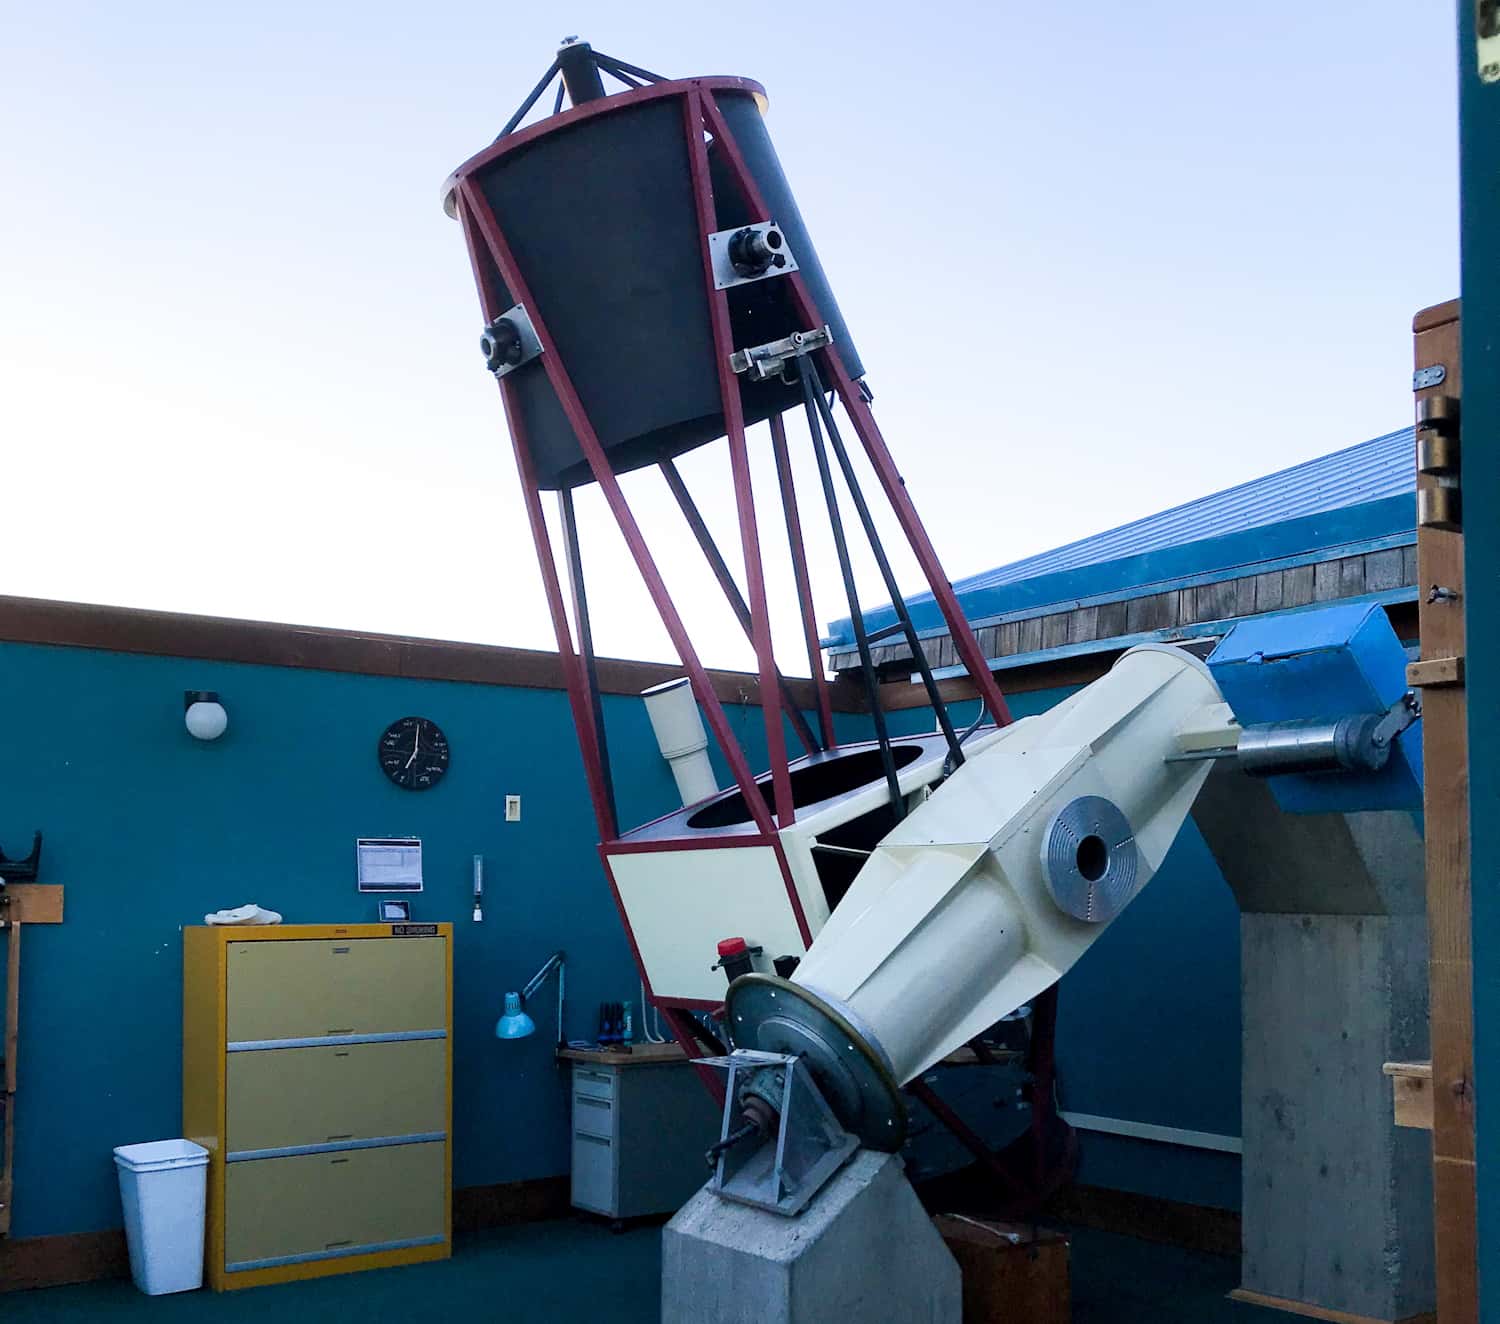 The Challenger Telescope